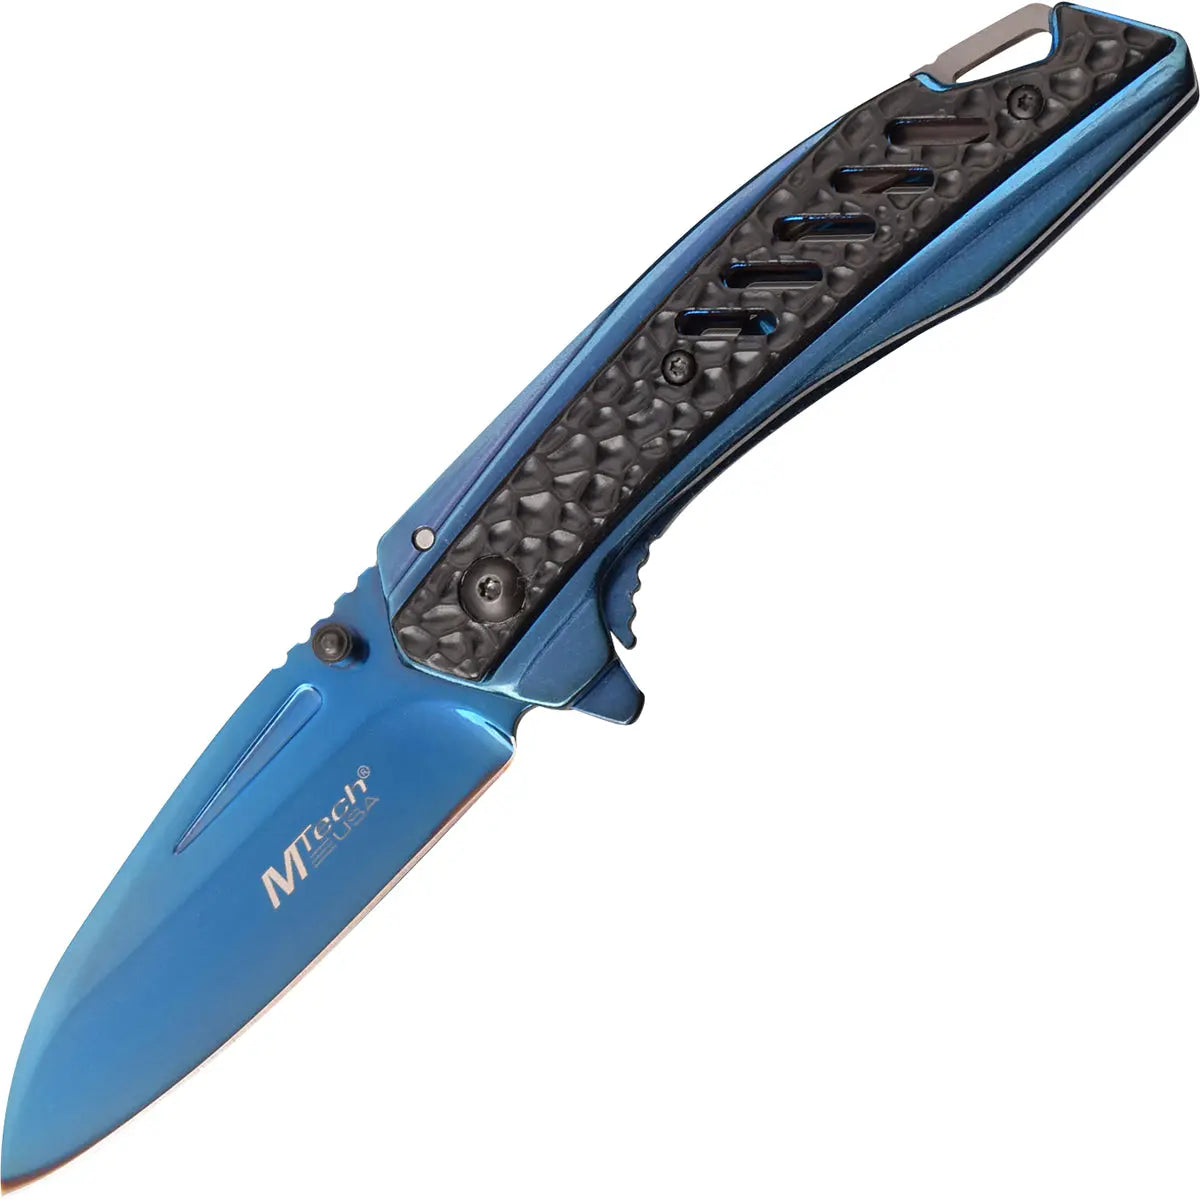 MTech USA Framelock Spring Assisted Folding Knife, 3.25" Blade, Blue, MT-A1133BL M-Tech